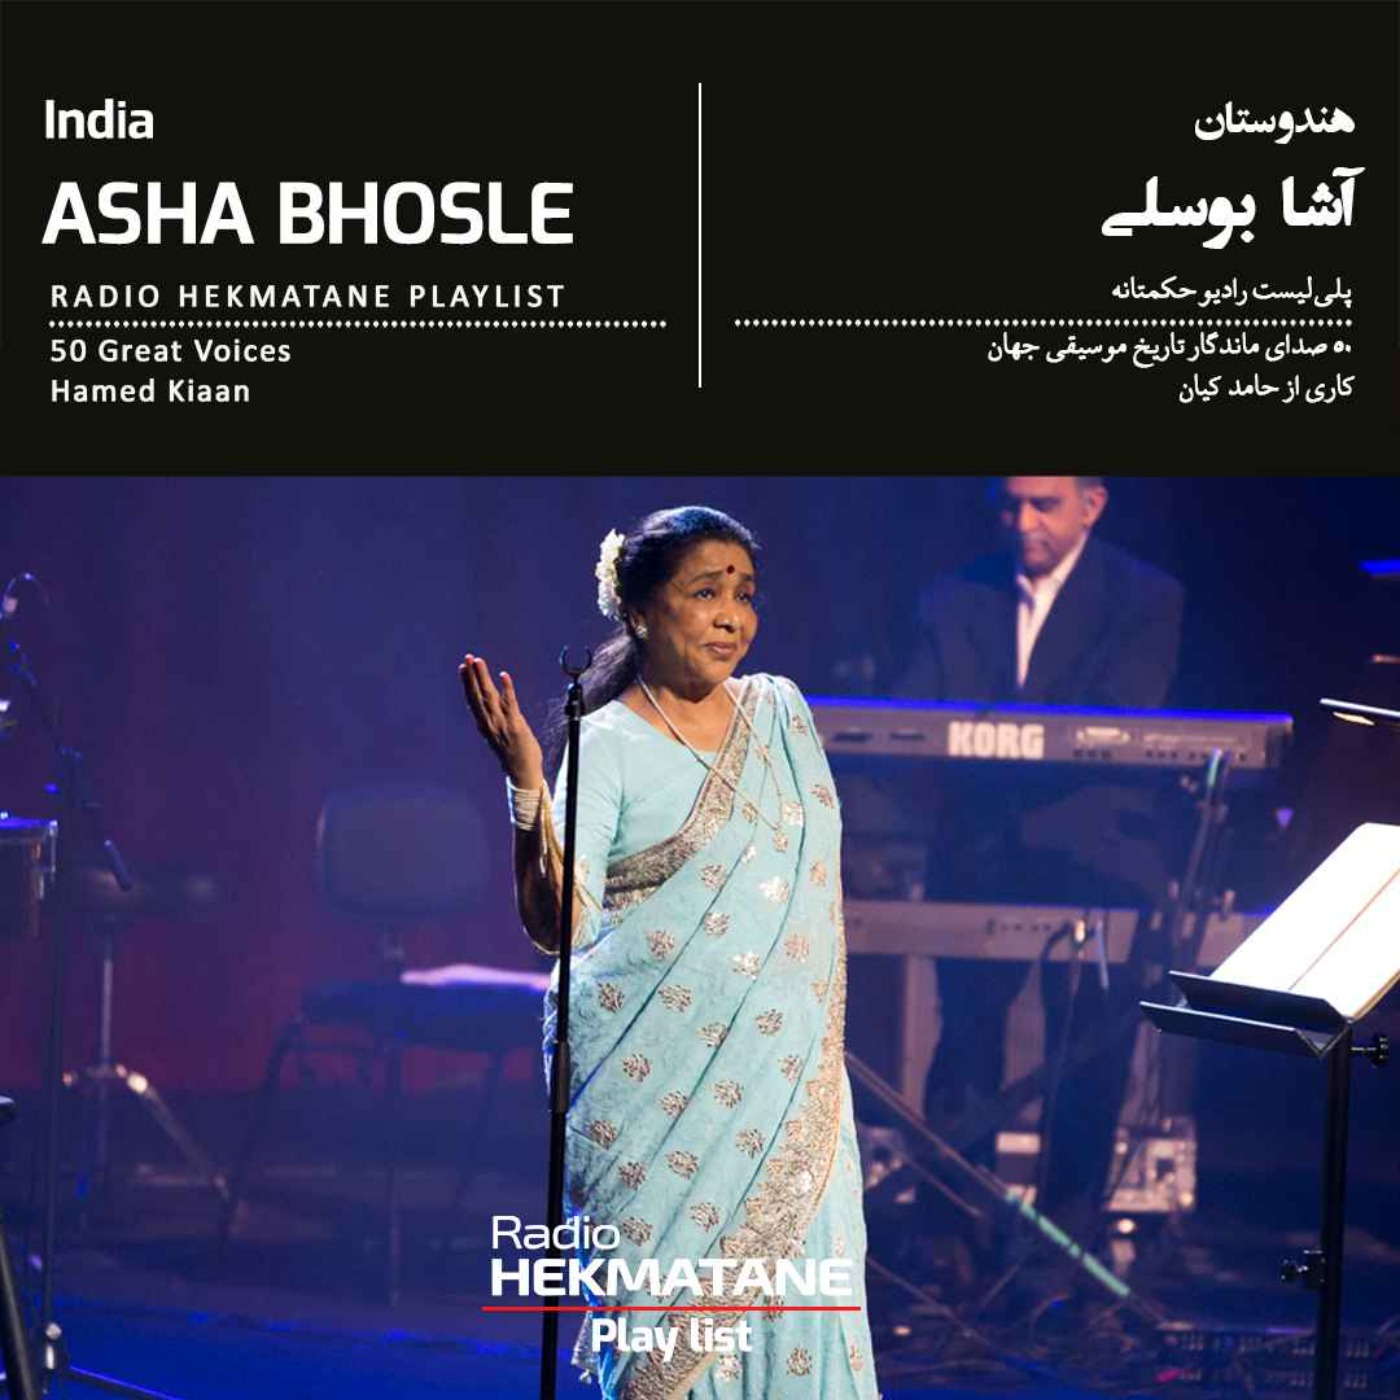 پلی‌لیستِ آشا بوسلی | Playlist Of Asha Bhosle